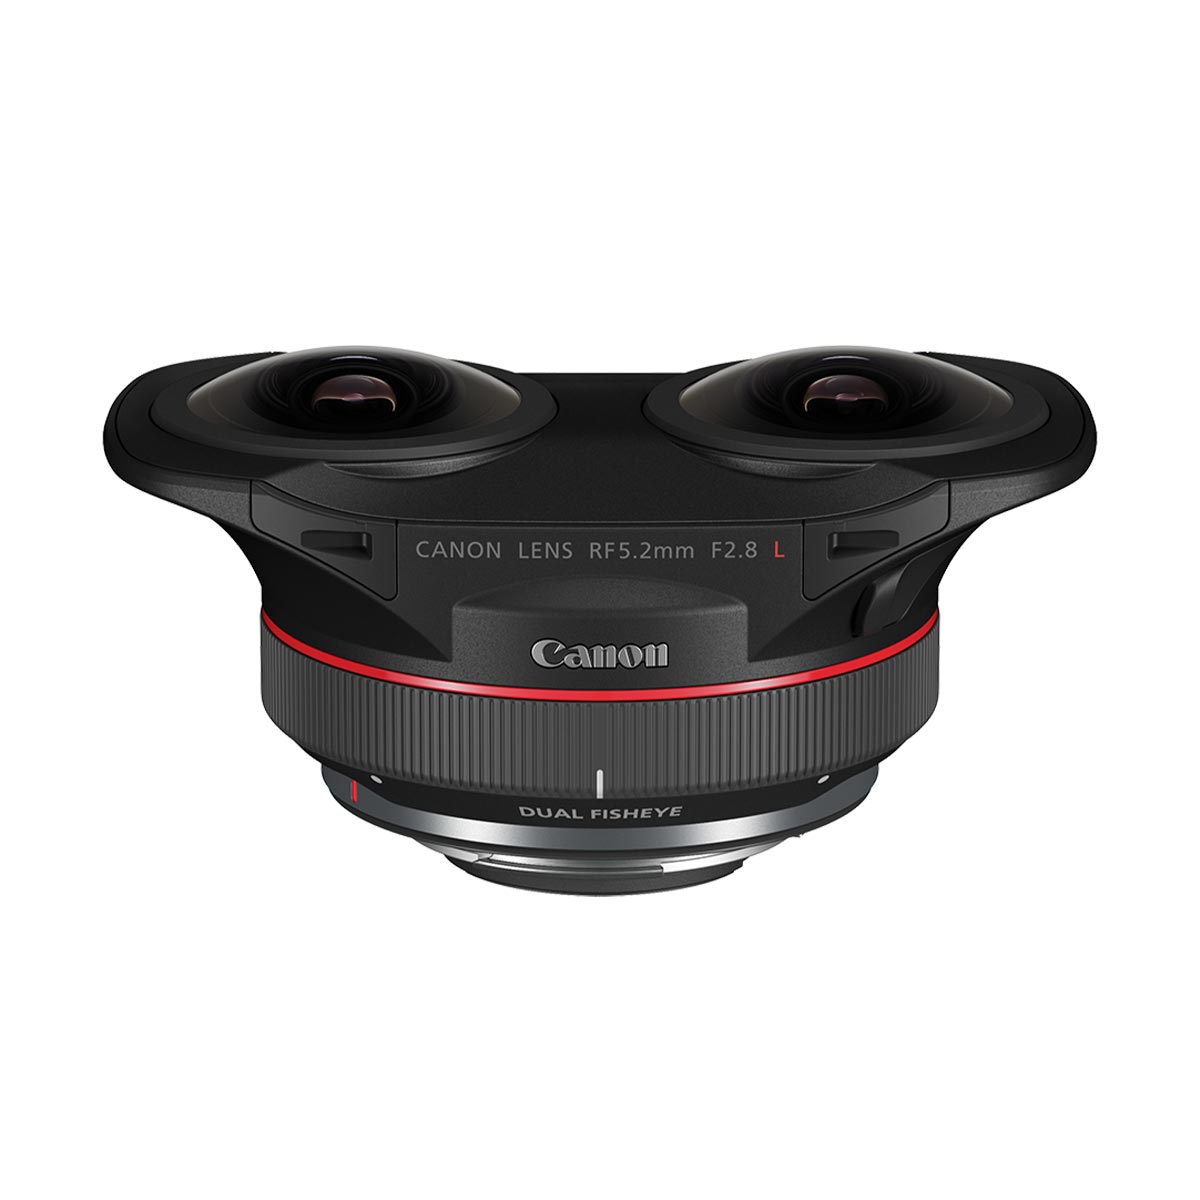 Canon RF 5.2mm F2.8L Dual Fisheye 3D VR Lens